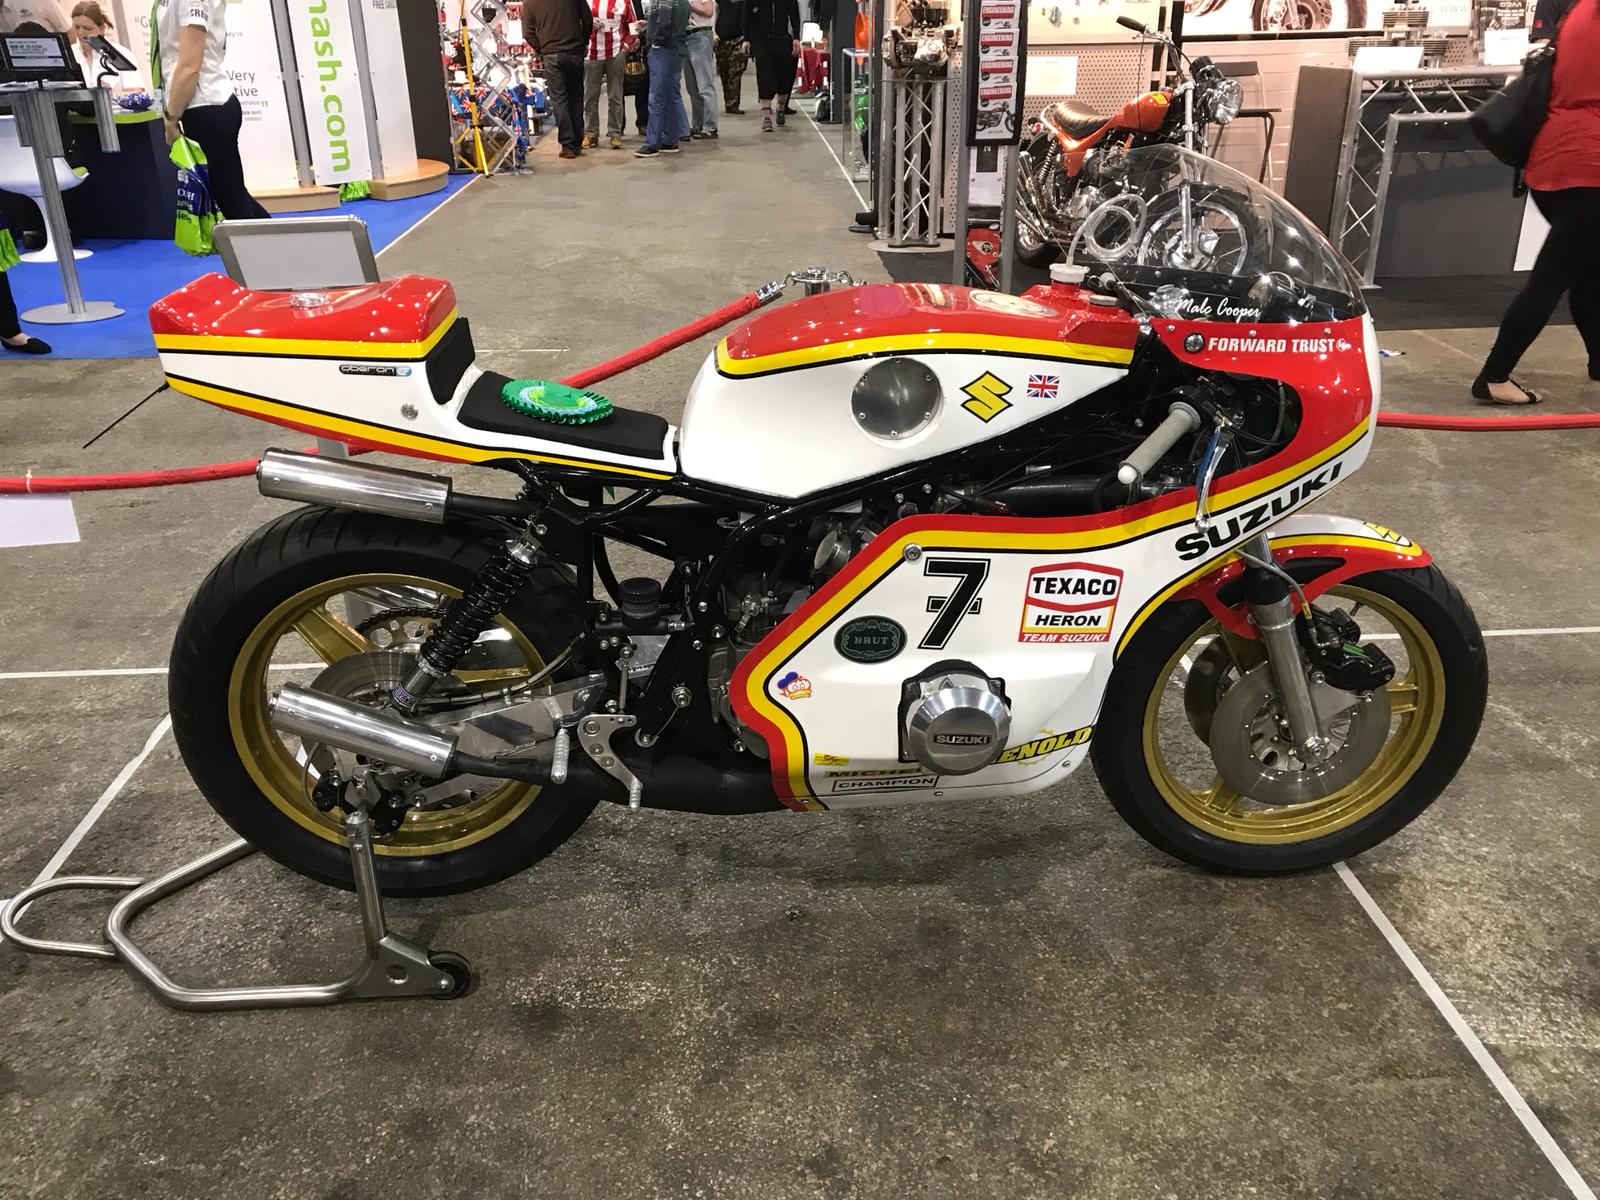 1974 Suzuki TR750 - replica of Barry Sheen's 1st world championship winning bike